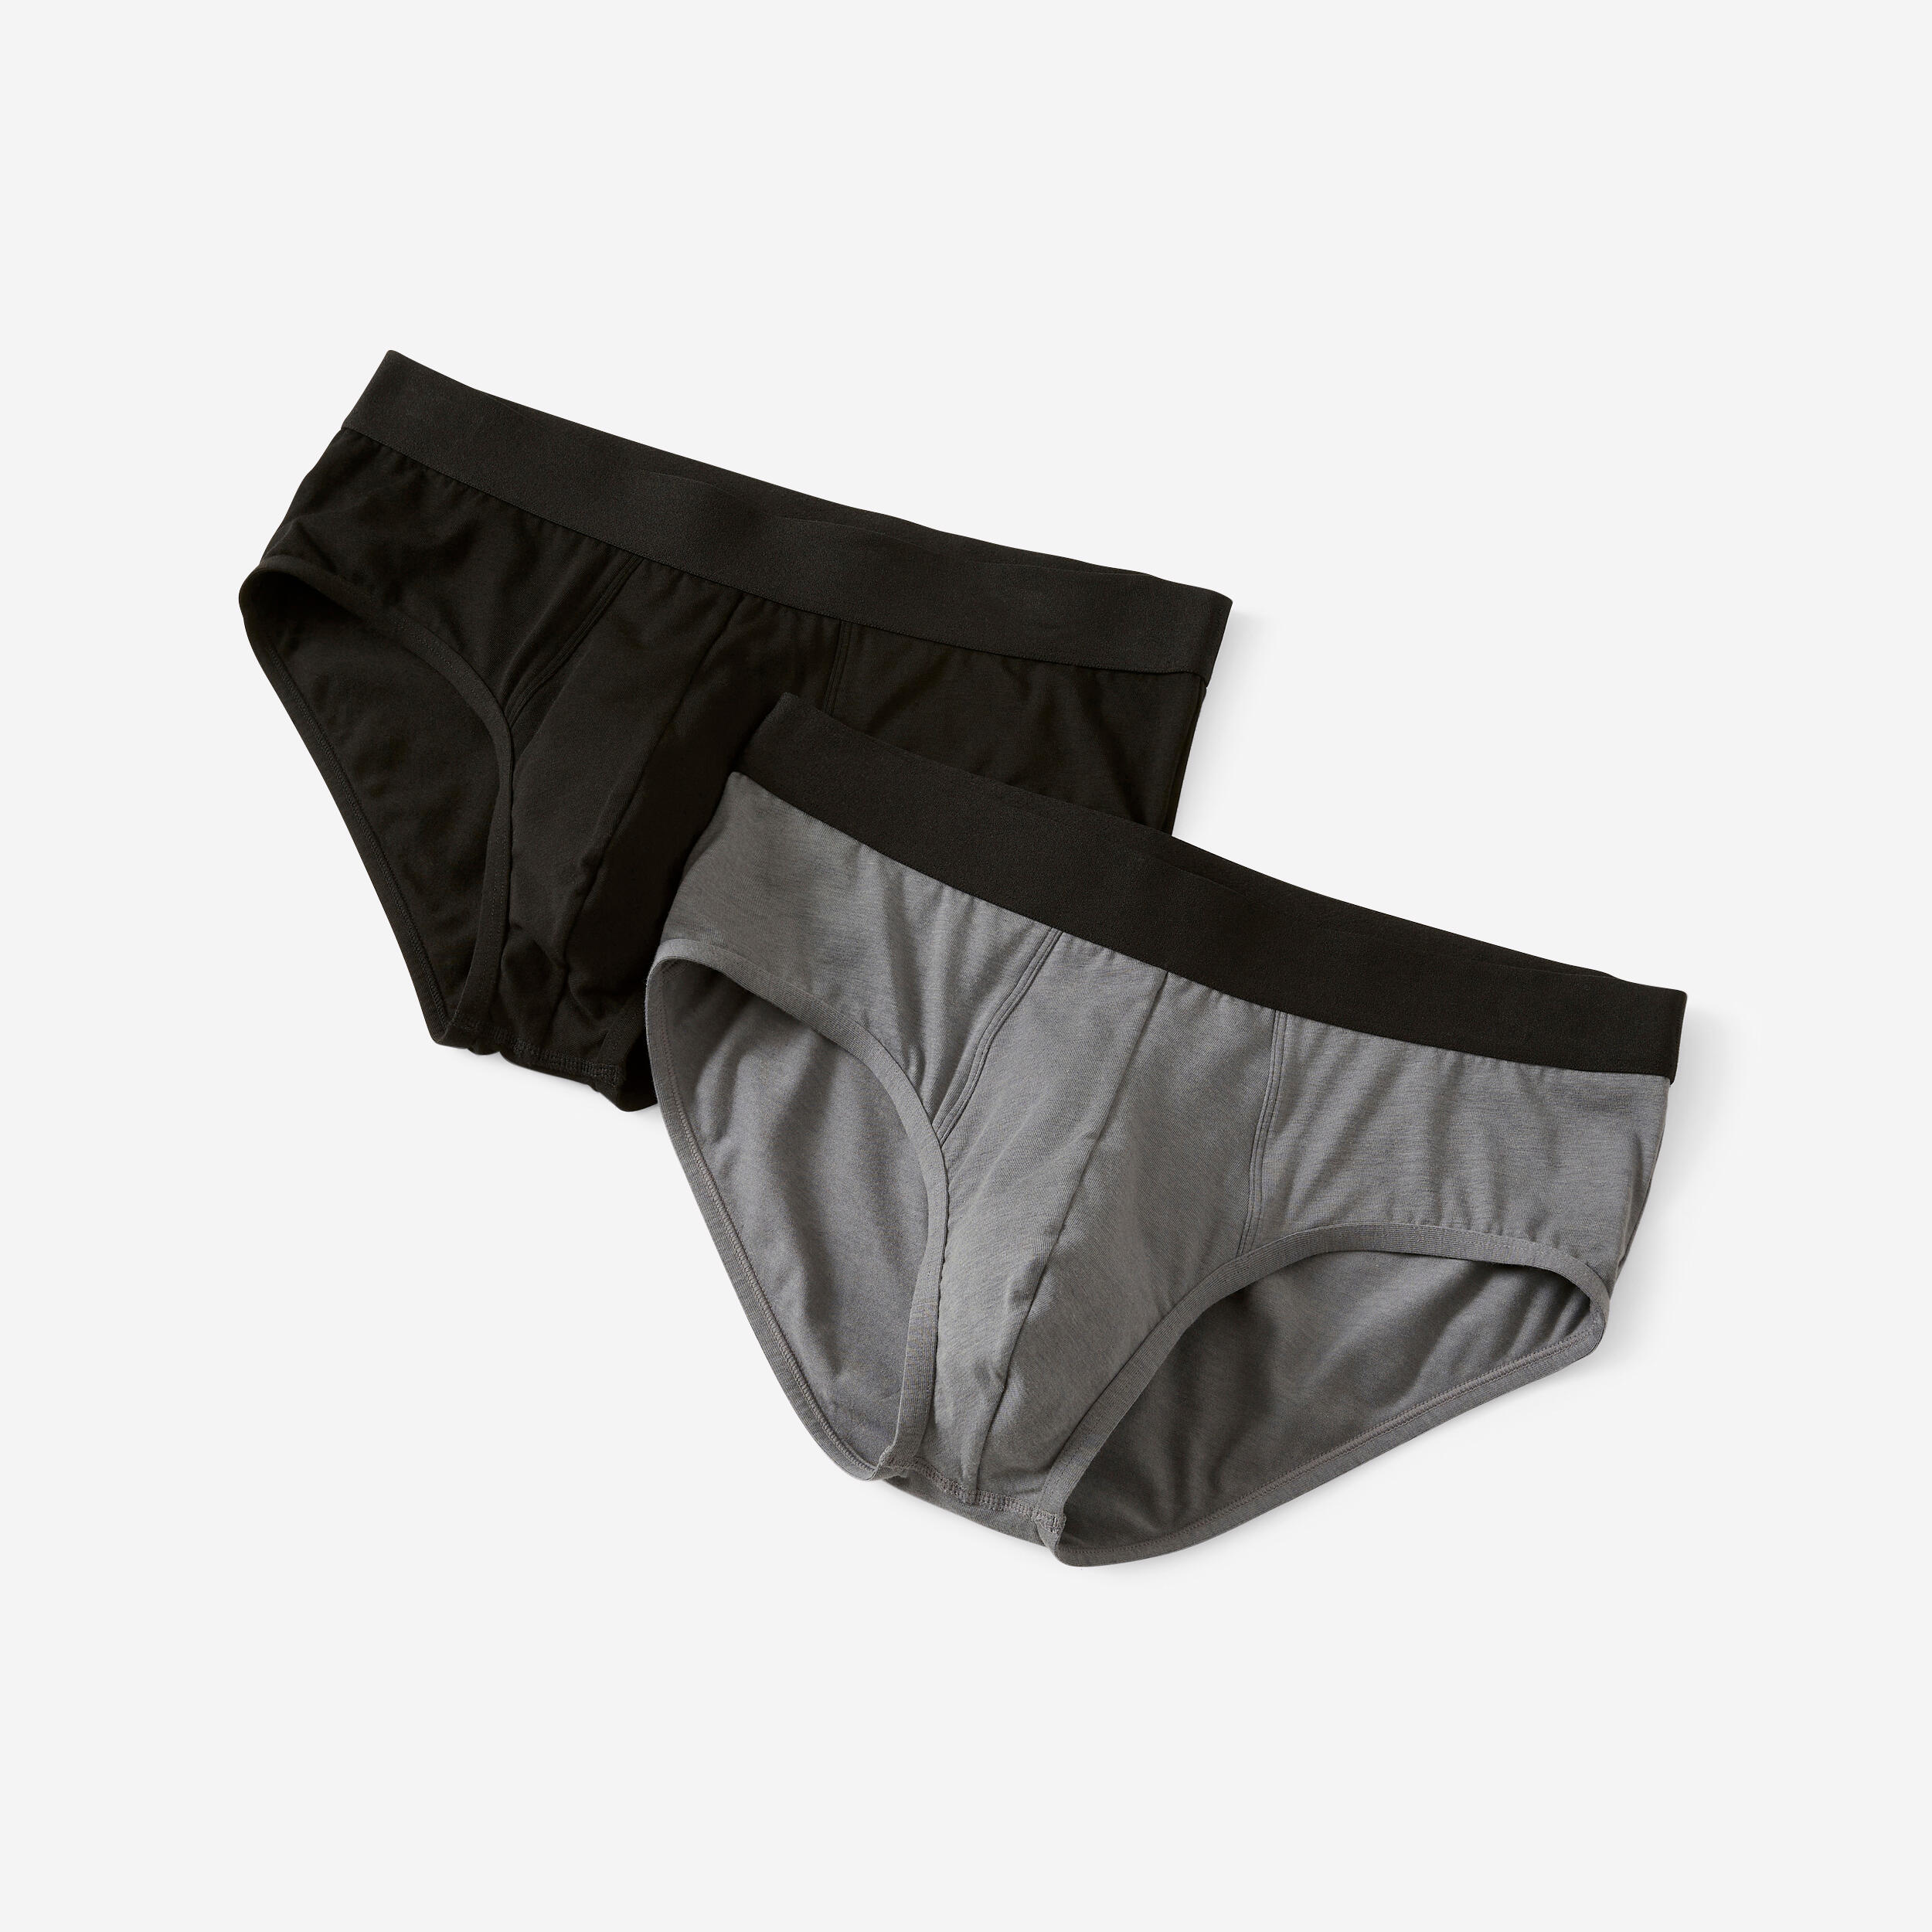 DOMYOS Men's Cotton-Rich Fitness Briefs 500 (2-pack) - Black/Grey